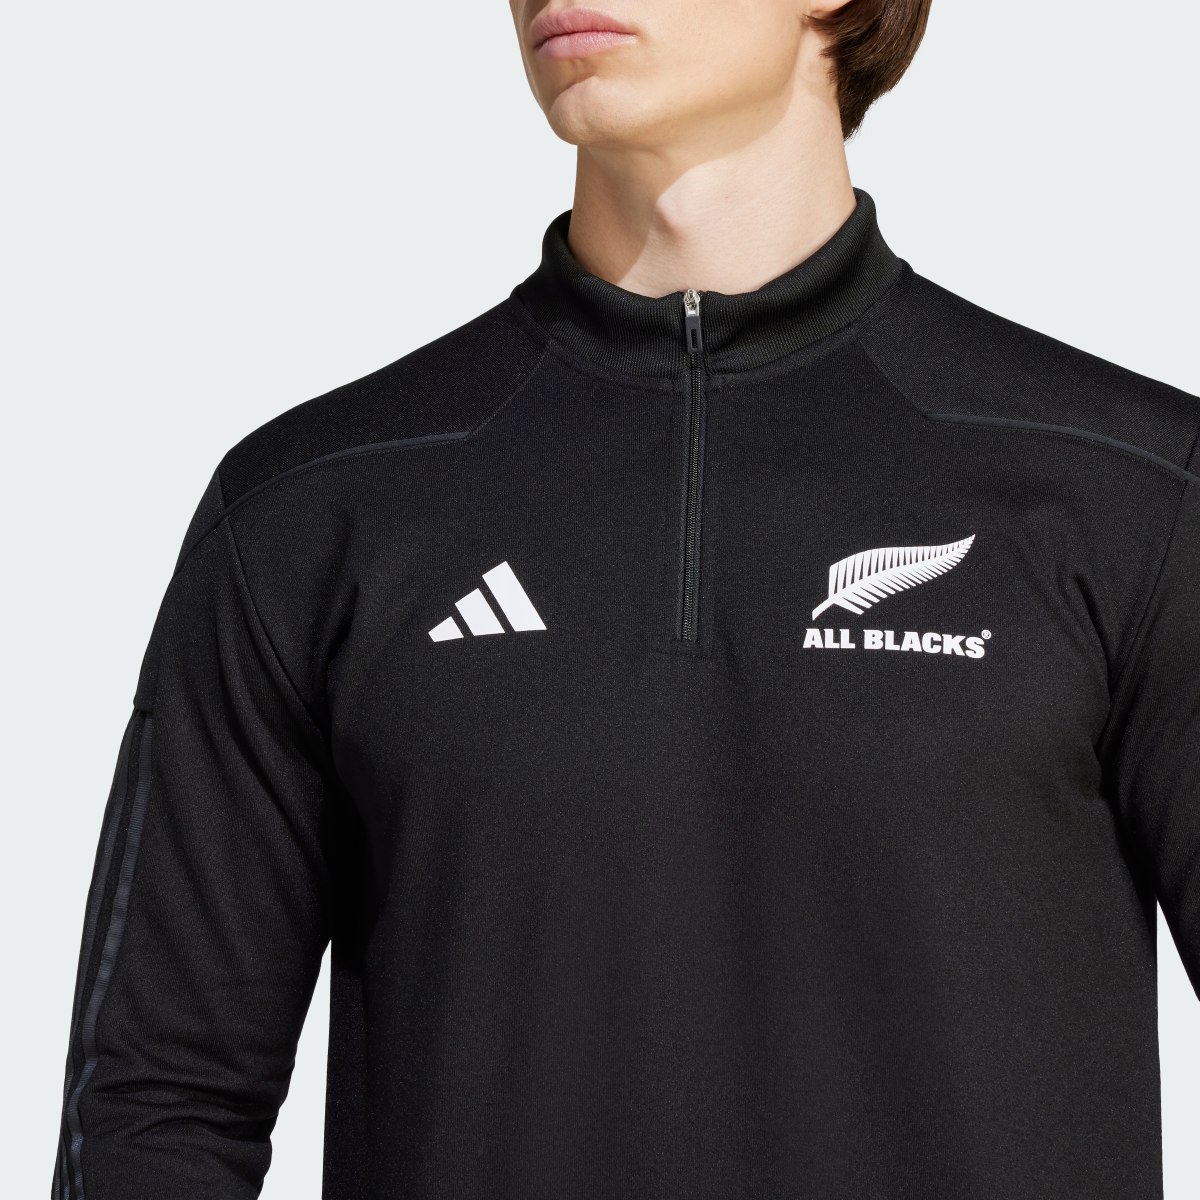 Adidas All Blacks AEROREADY Warming Long Sleeve Fleece Top. 6